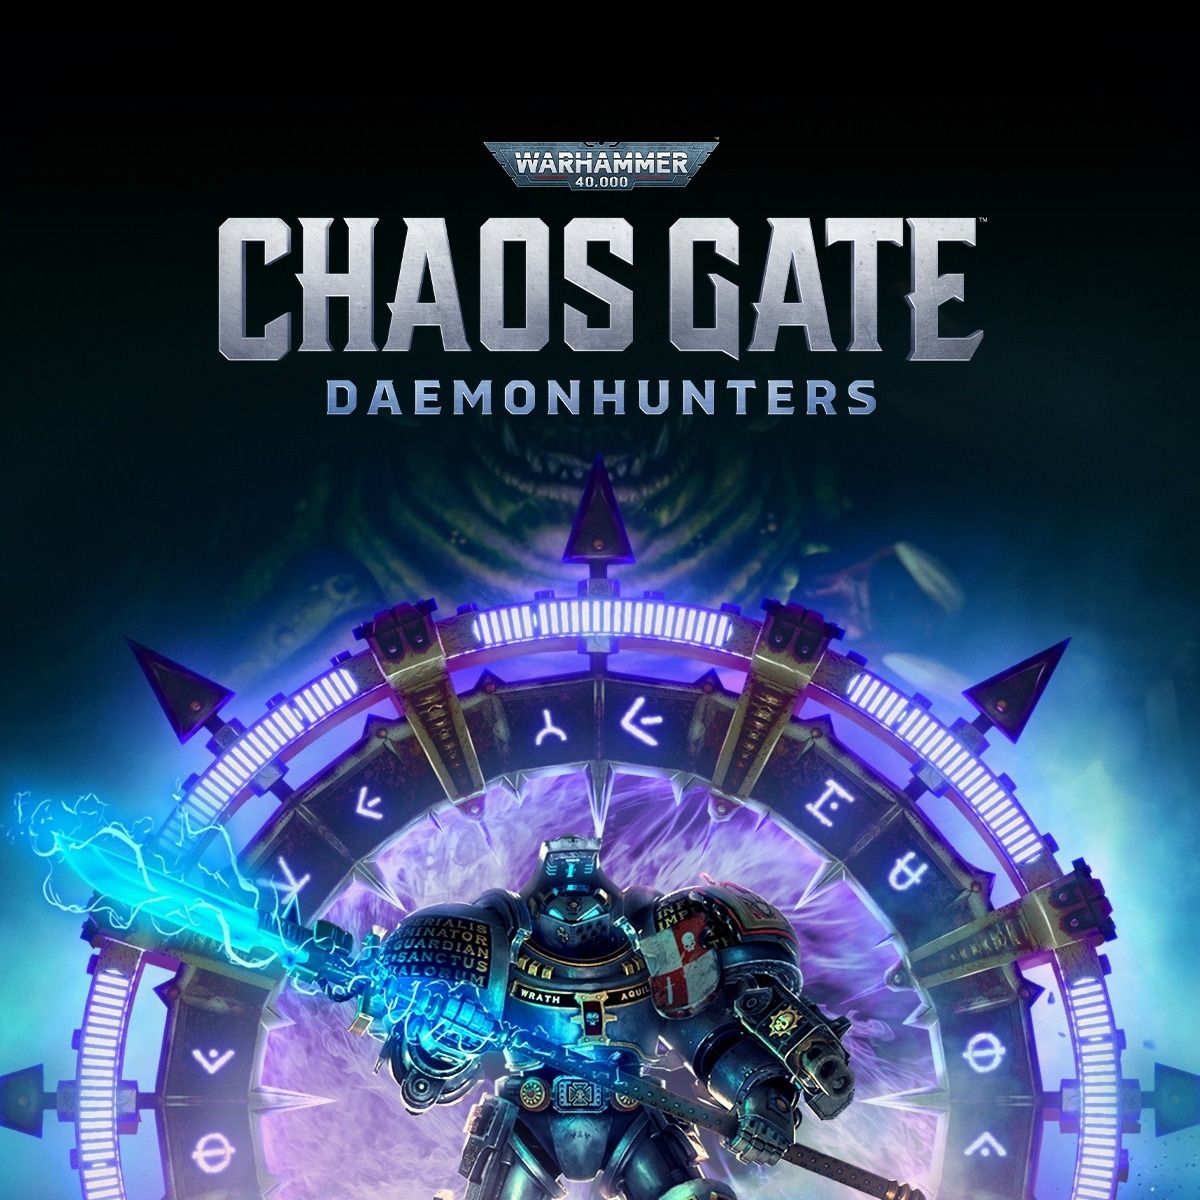 Warhammer 40k: Chaos Gate - Daemonhunters - Steam